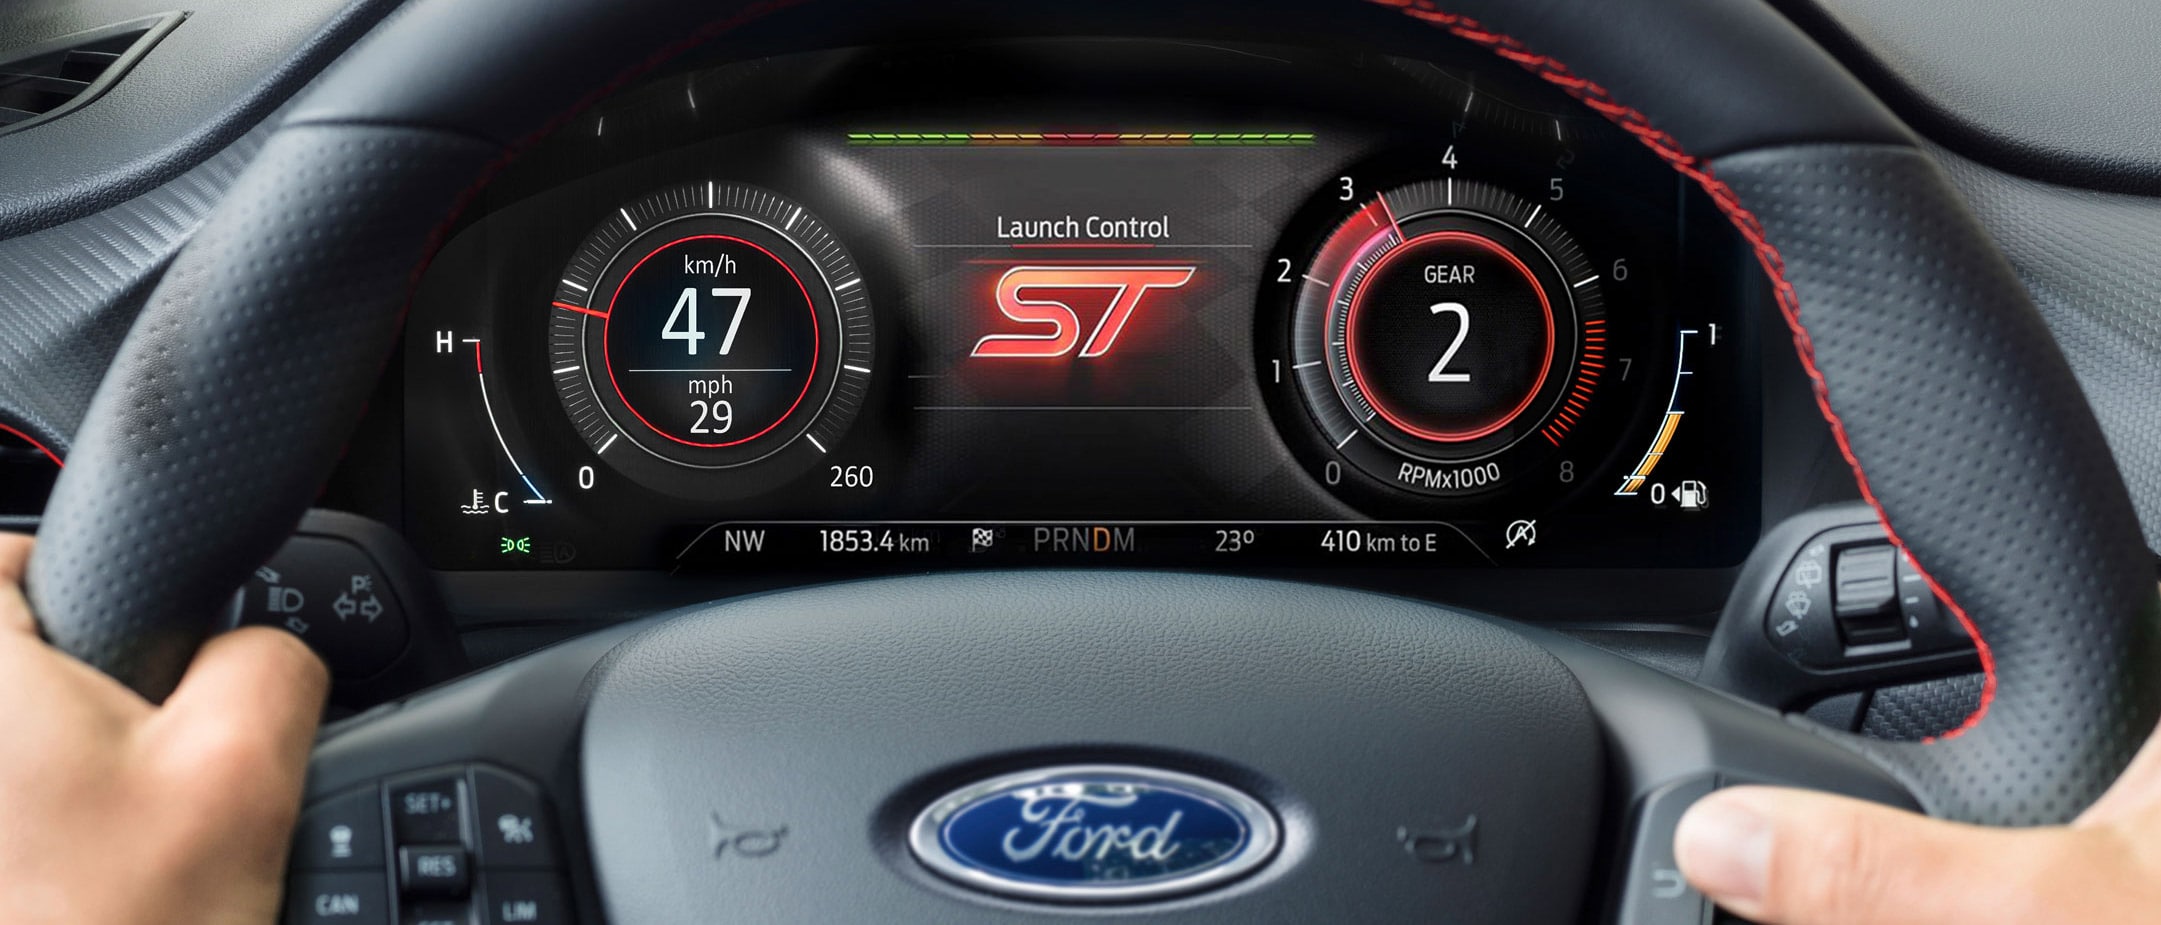 Ford Puma ST dashboard showing launch control